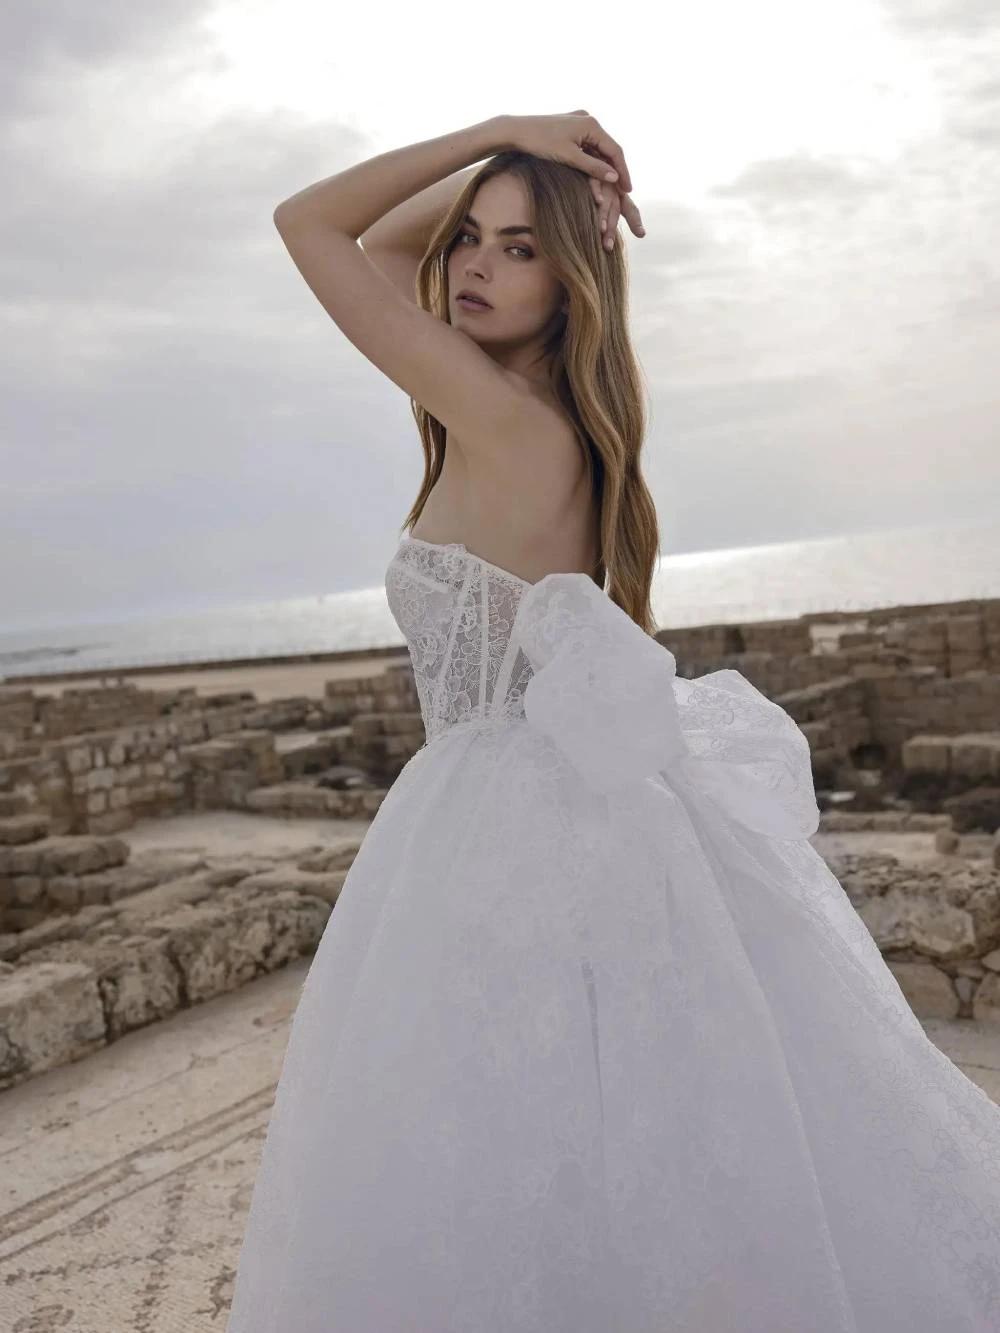 Model wearing a white dress by Pnina Tornai